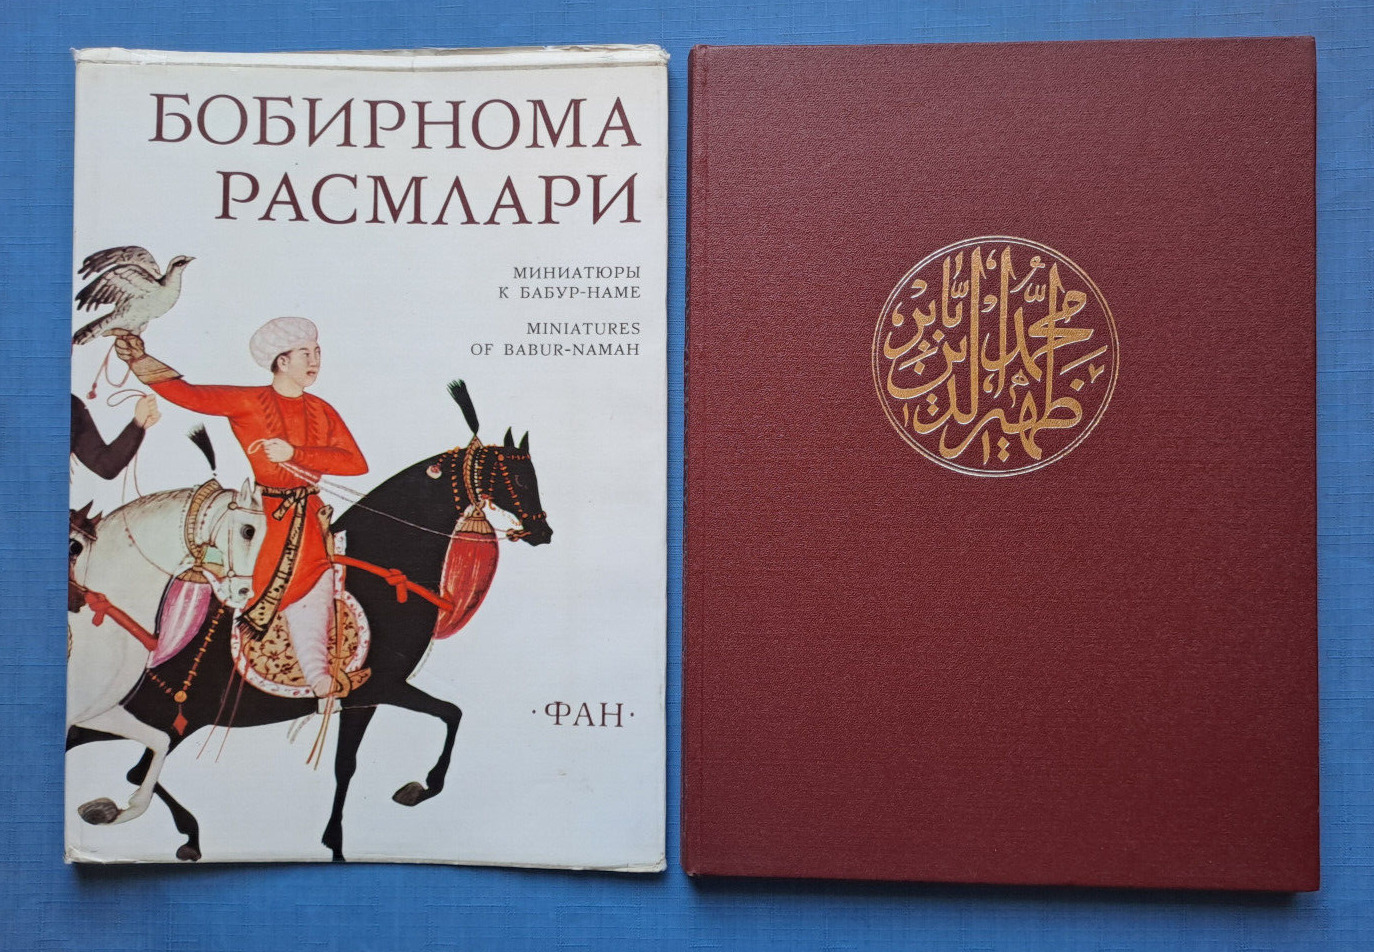 1978 Miniatures of Babur-Namah Uzbekistan Samarkand Large album Russian book